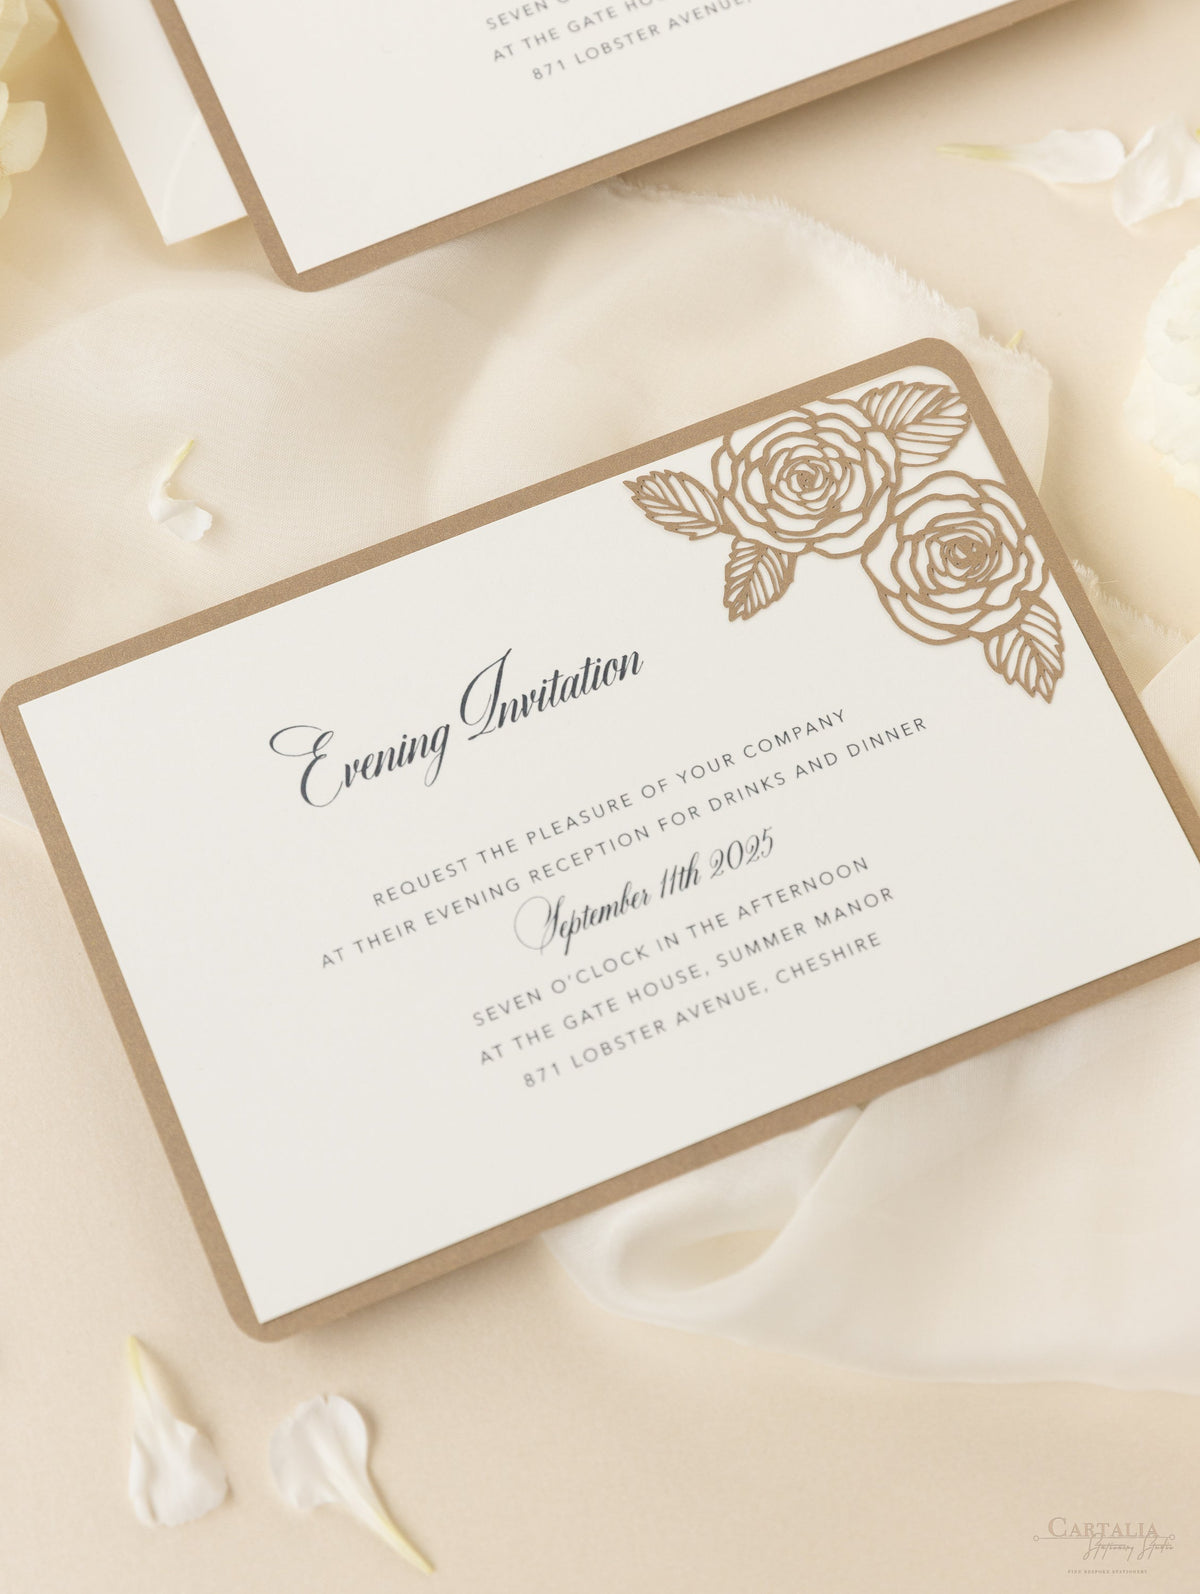 Invitación de noche de boda con corte láser de rosas románticas